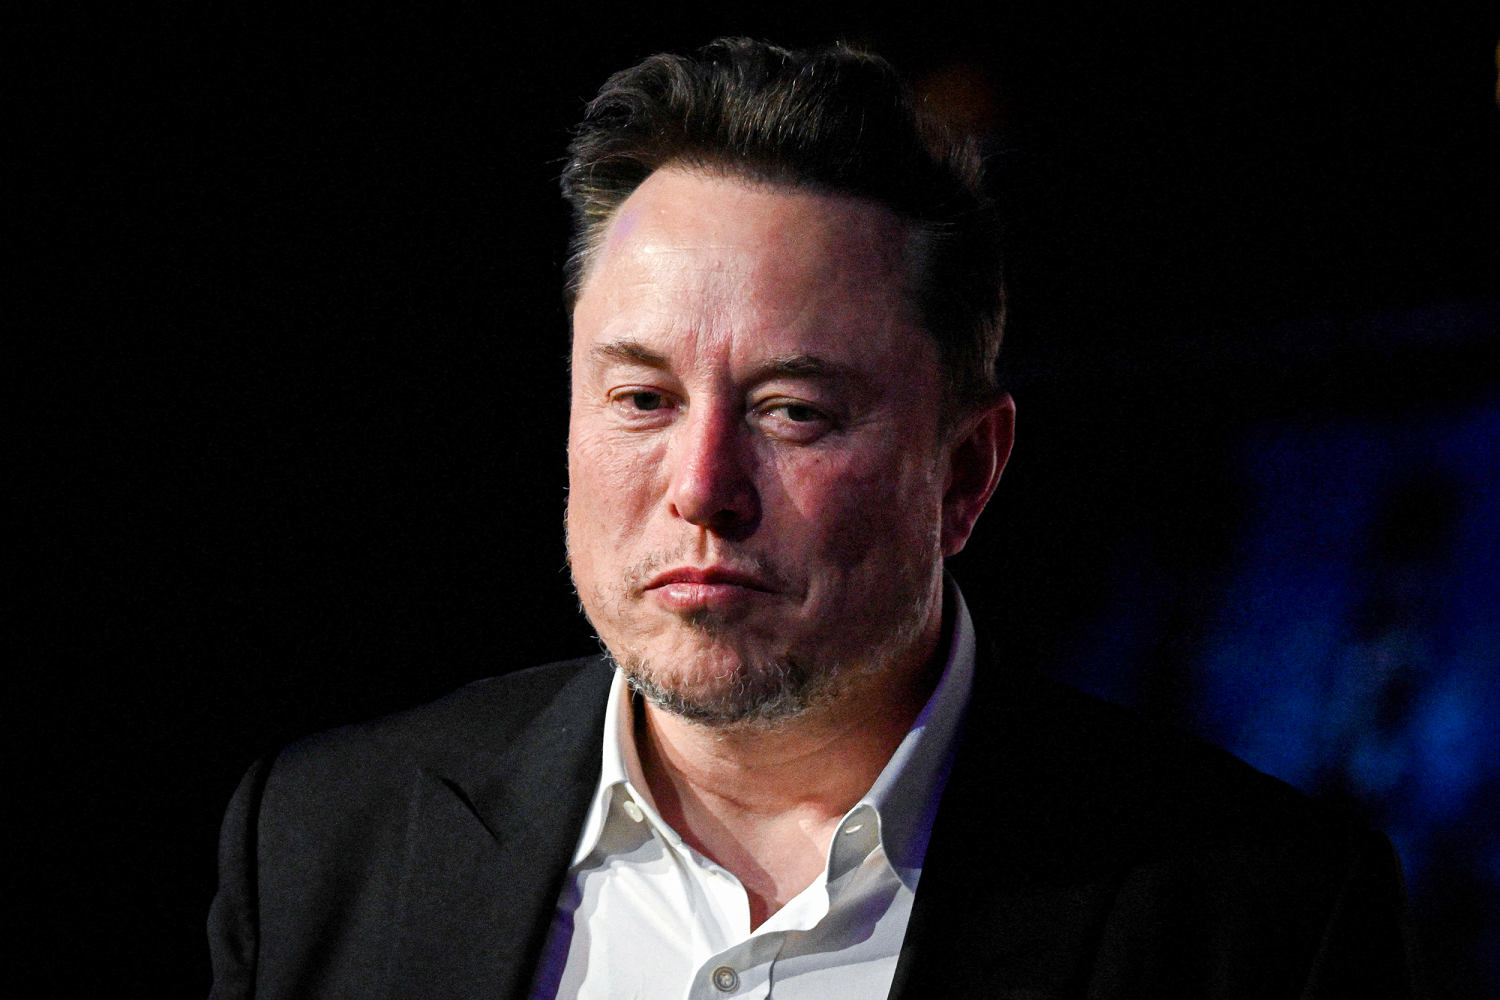 Should Elon Musk be paid $56 billion? Tesla shareholders get to vote